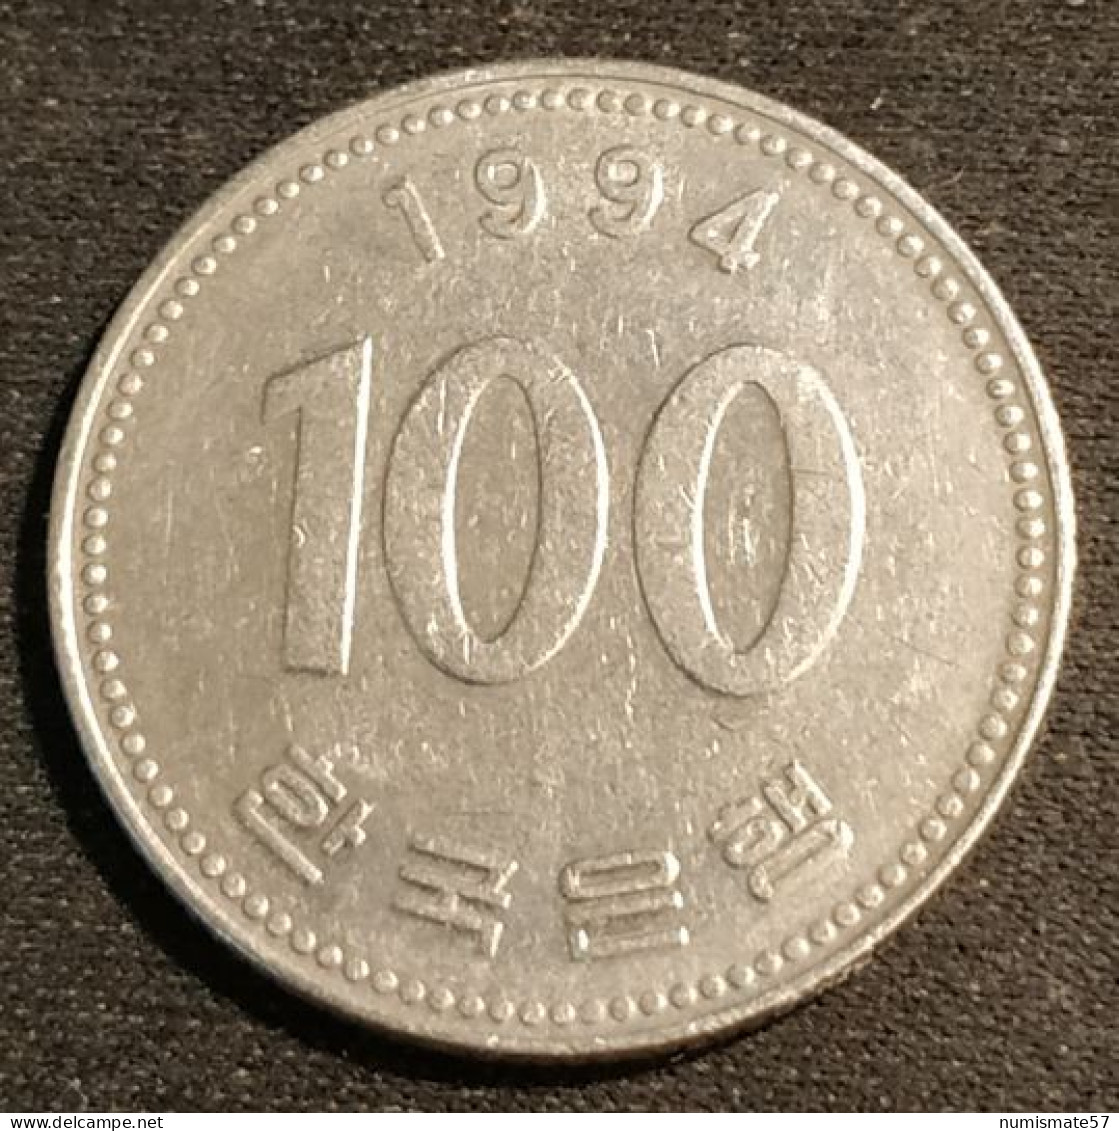 COREE DU SUD - SOUTH KOREA - 100 WON 1994 - KM 35 - Corée Du Sud